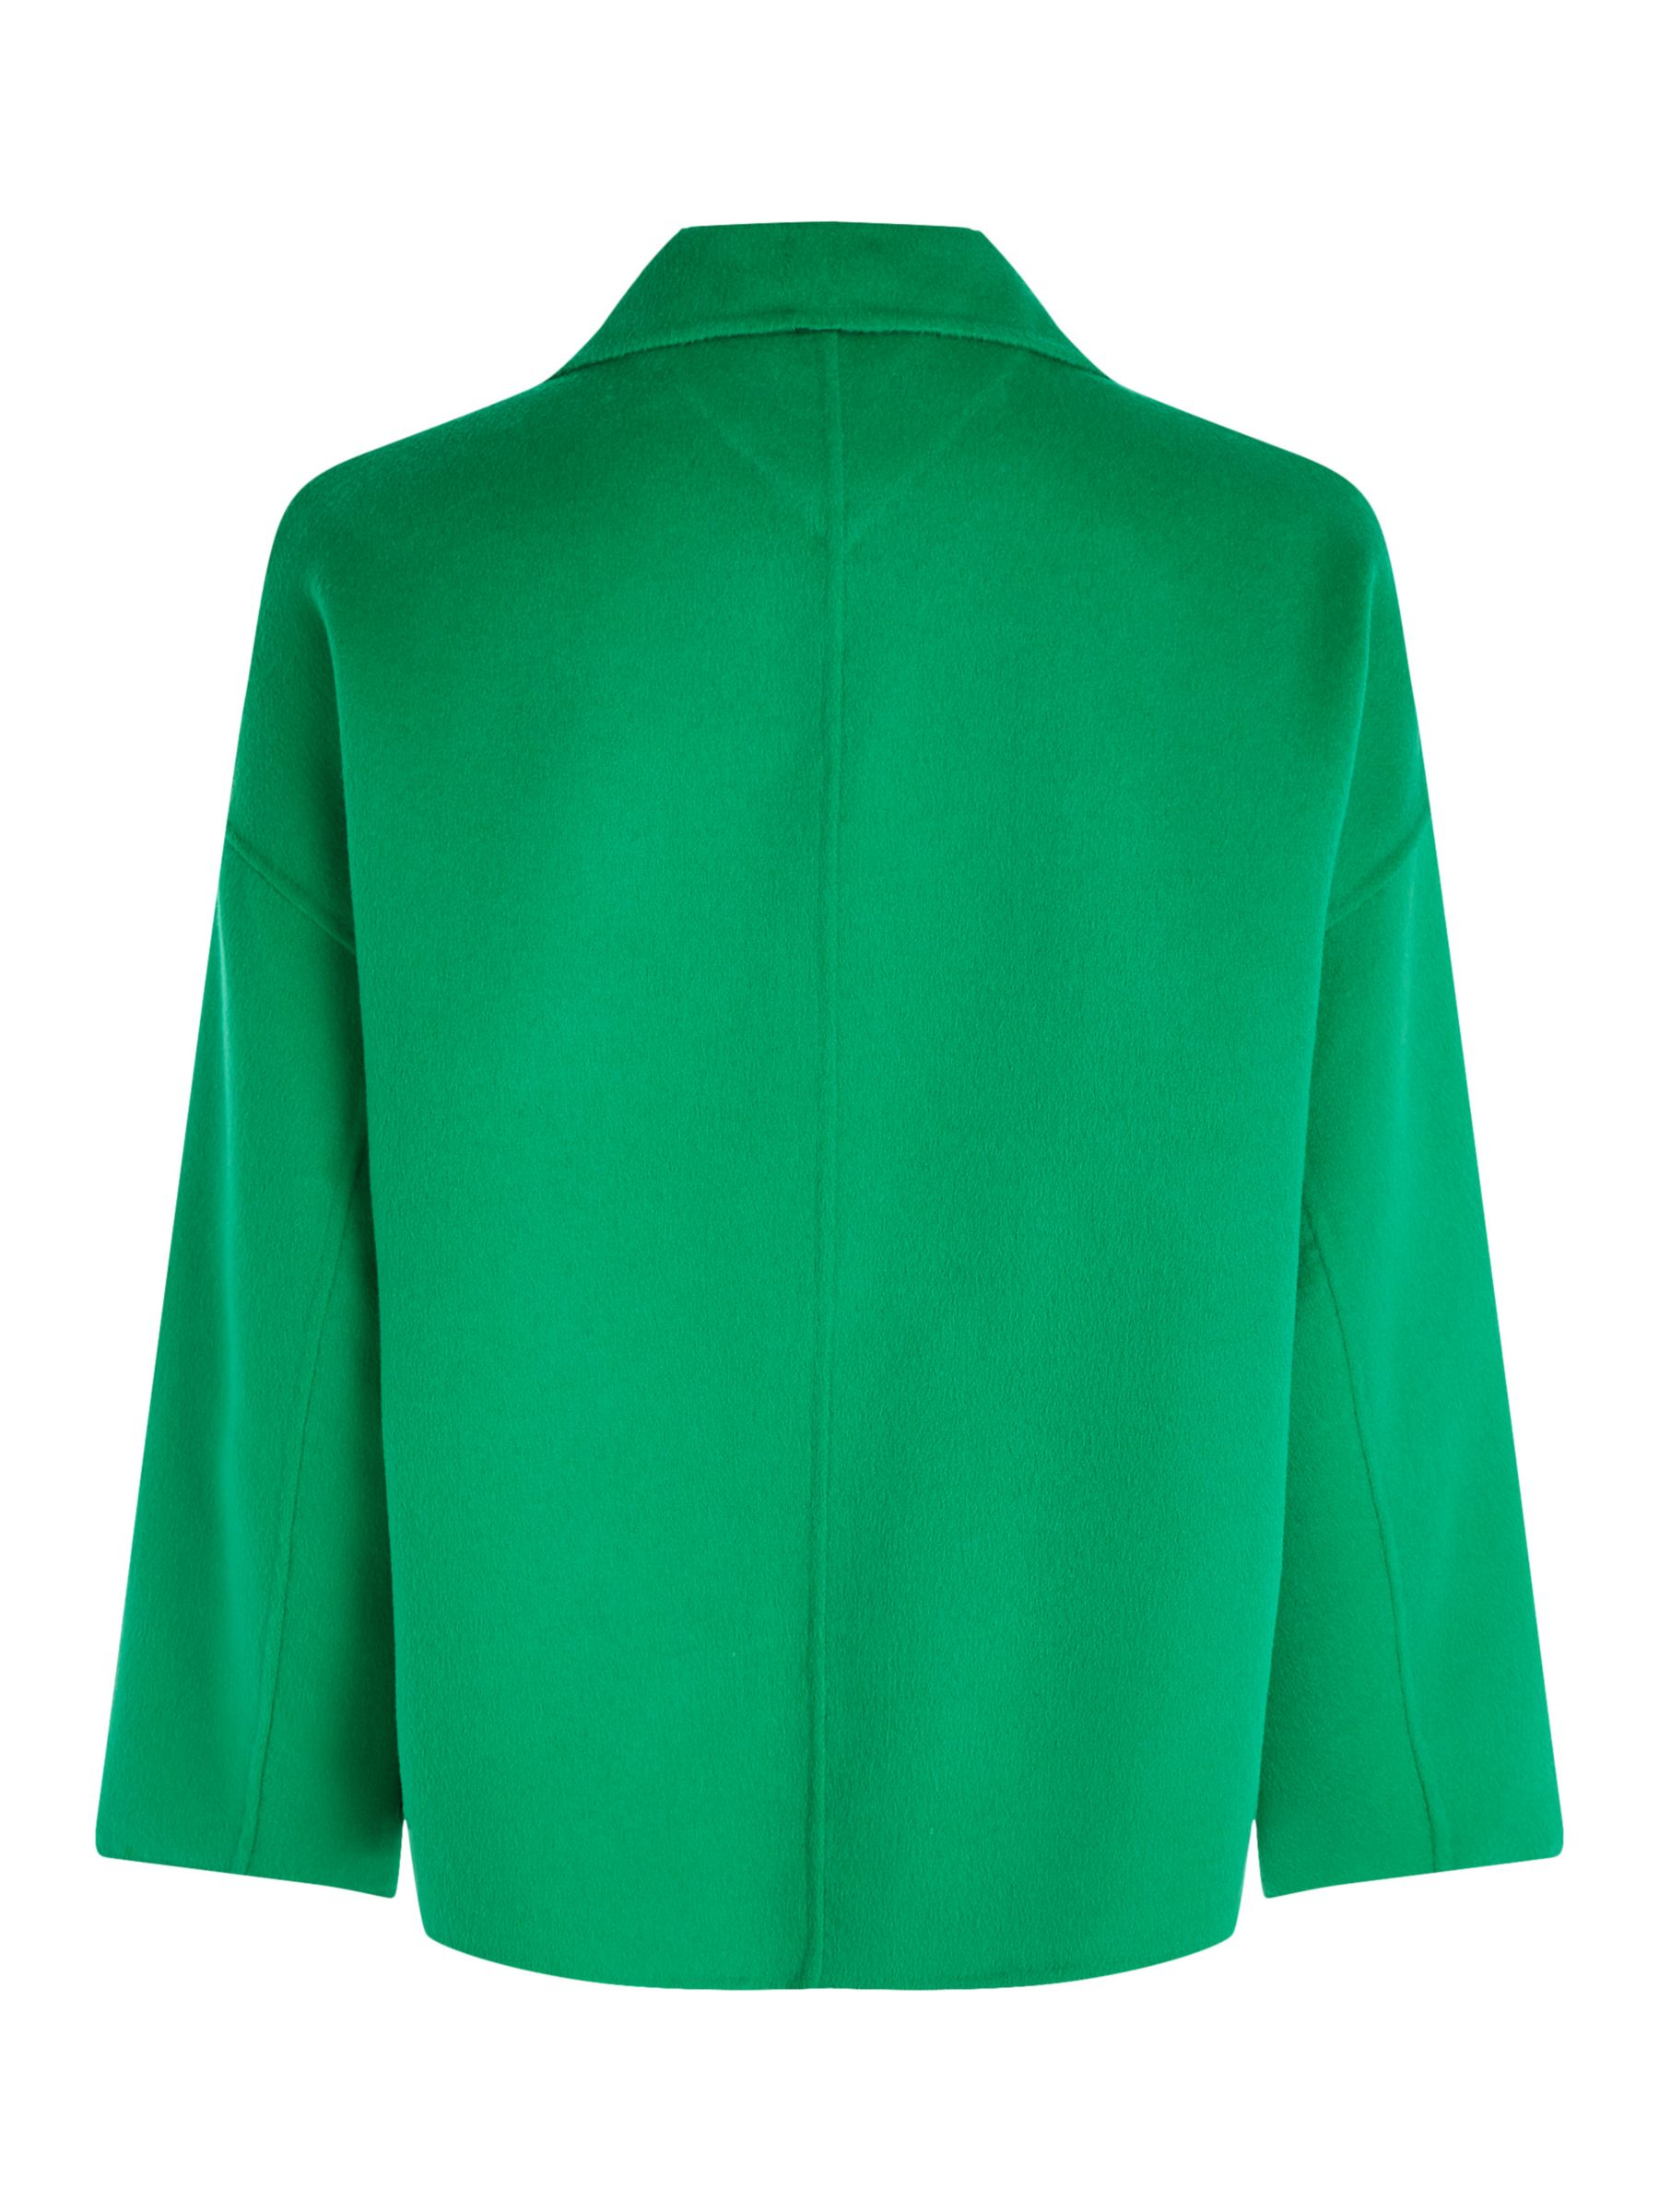 Buy Tommy Hilfiger Wool Blend Jacket, Olympic Green Online at johnlewis.com